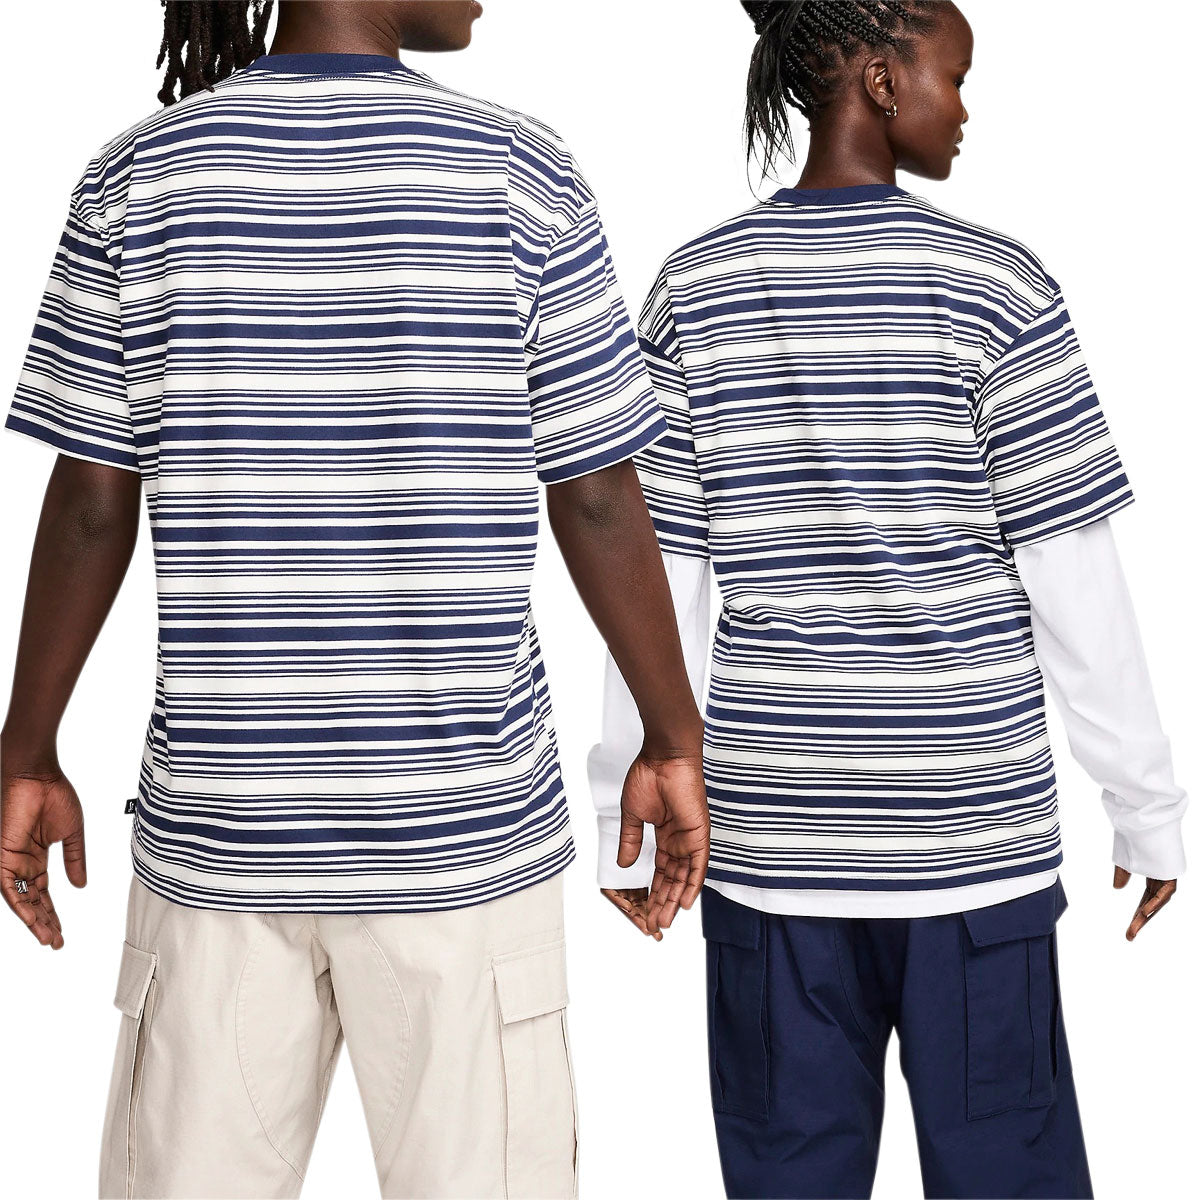 Nike SB Striped Skate T-Shirt - Midnight Navy image 3